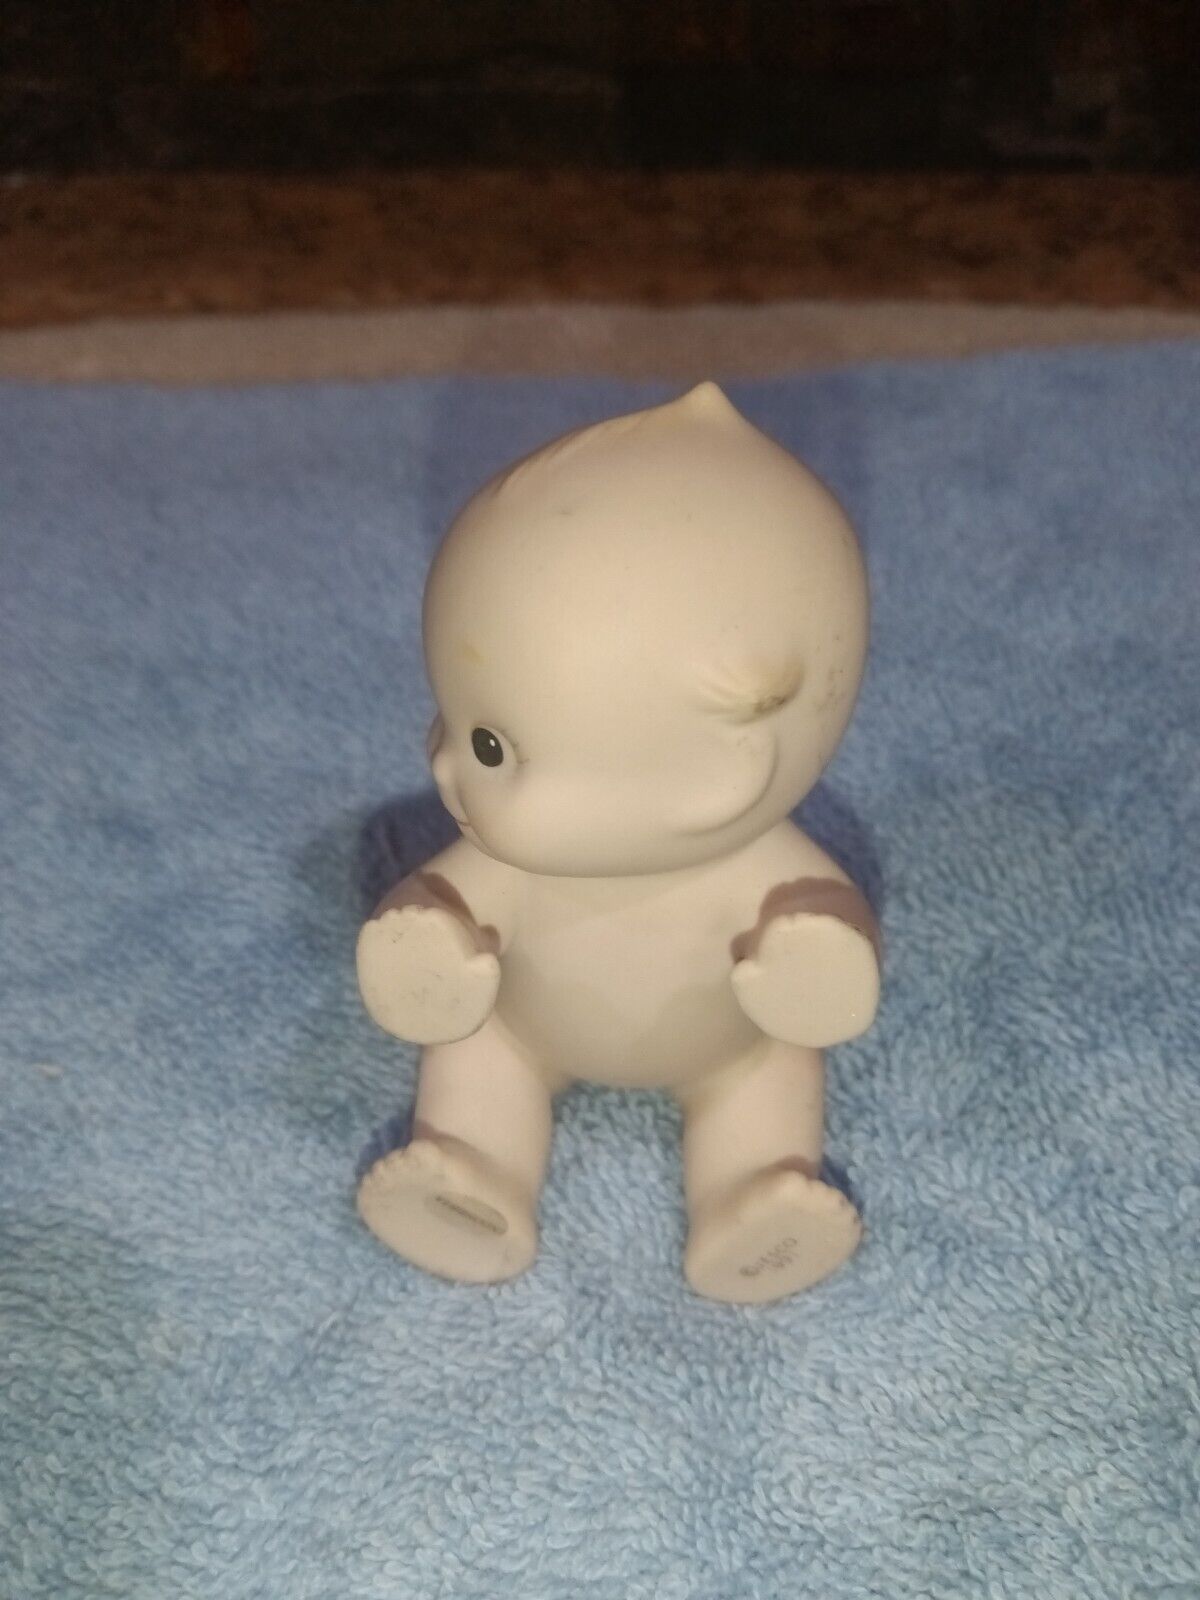 Vintage Jesco 1991 Porcelain Kewpie Baby Crawling Figurine